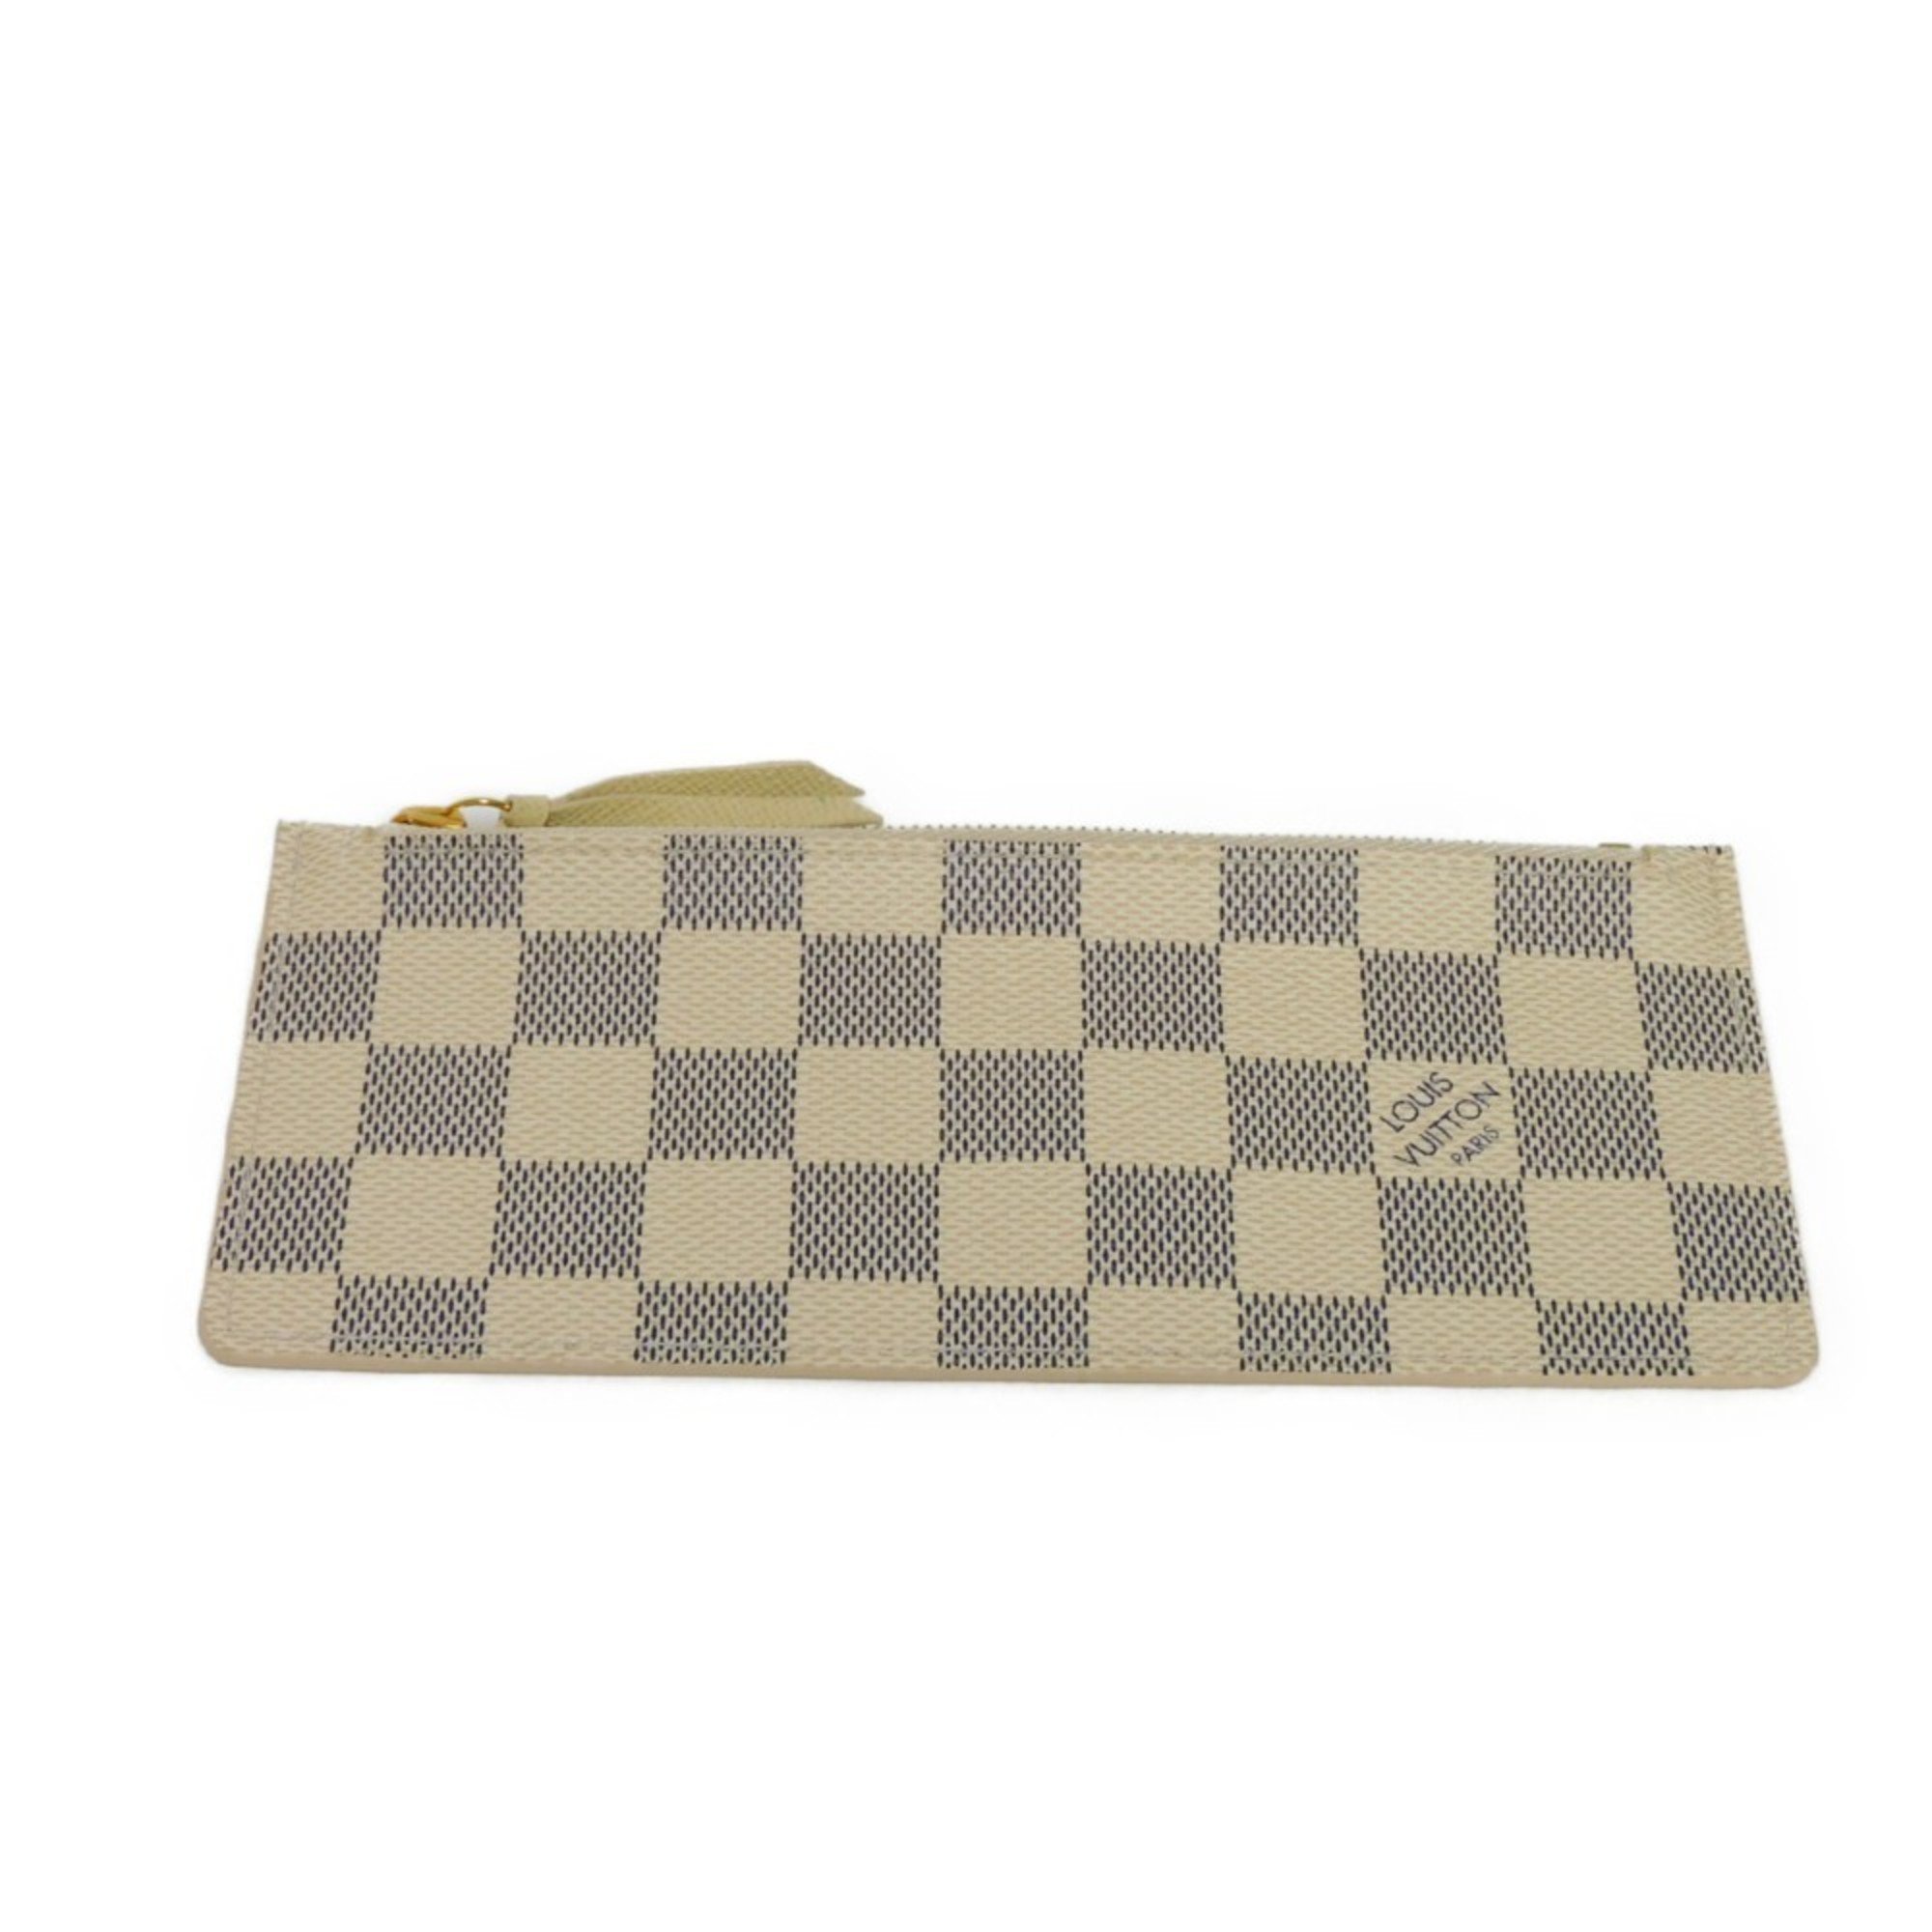 LOUIS VUITTON Trifold Wallet Portefeuille Josephine White Checkered Pattern Damier Azur Ivory N63545 Men's Women's Bill Purse